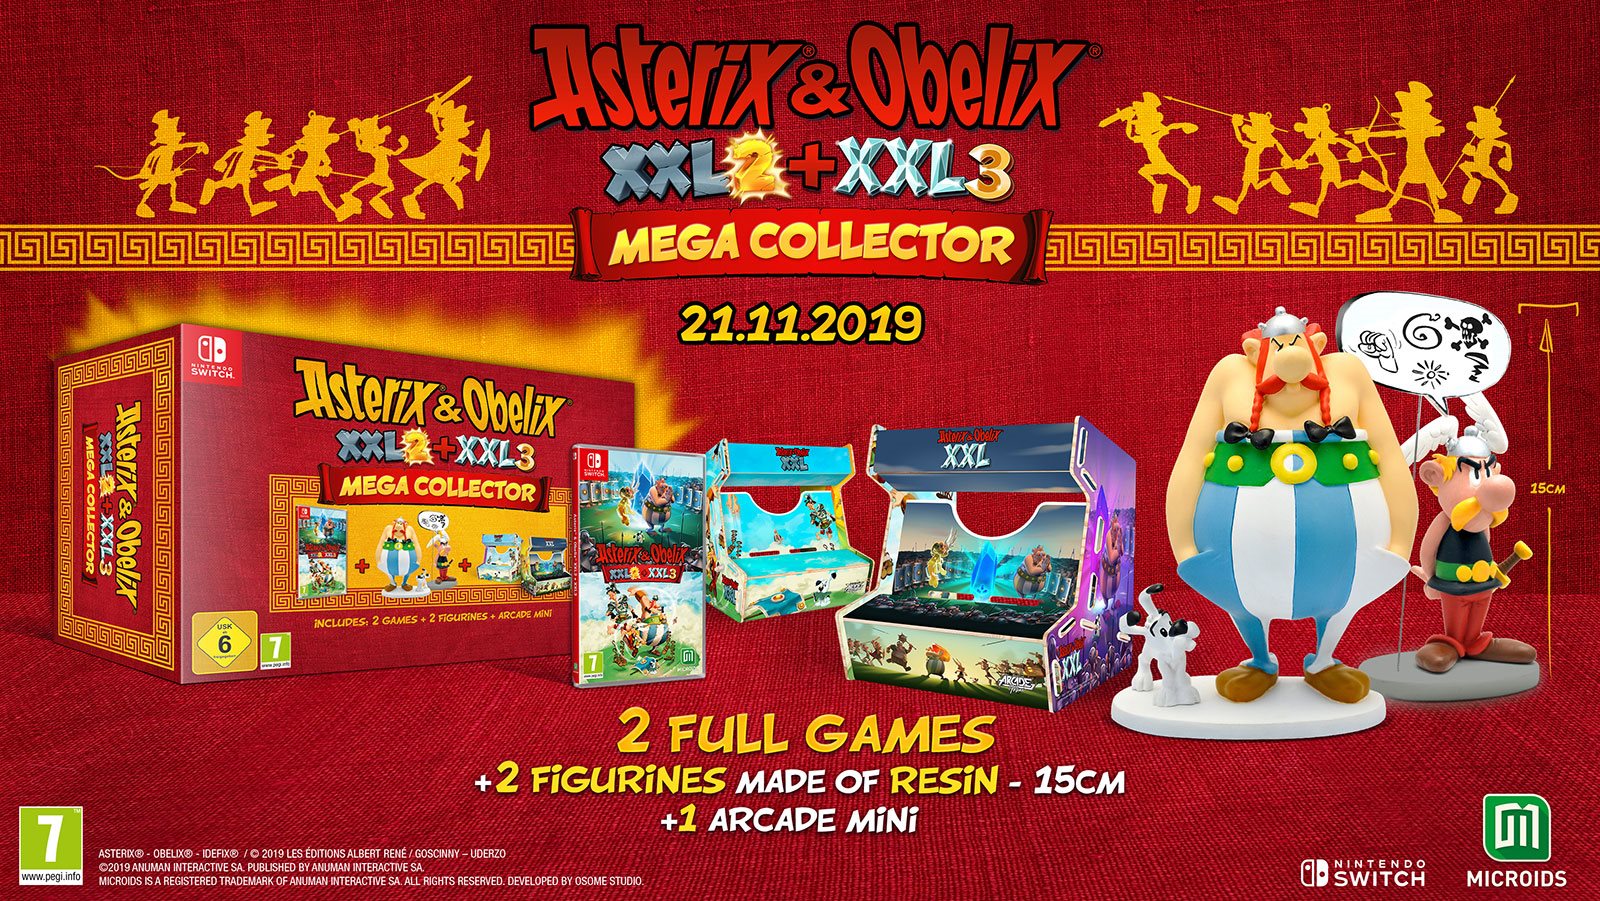 Asterix & Obelix XXL 2 + 3 - Mega Collector Box (Switch), Microids